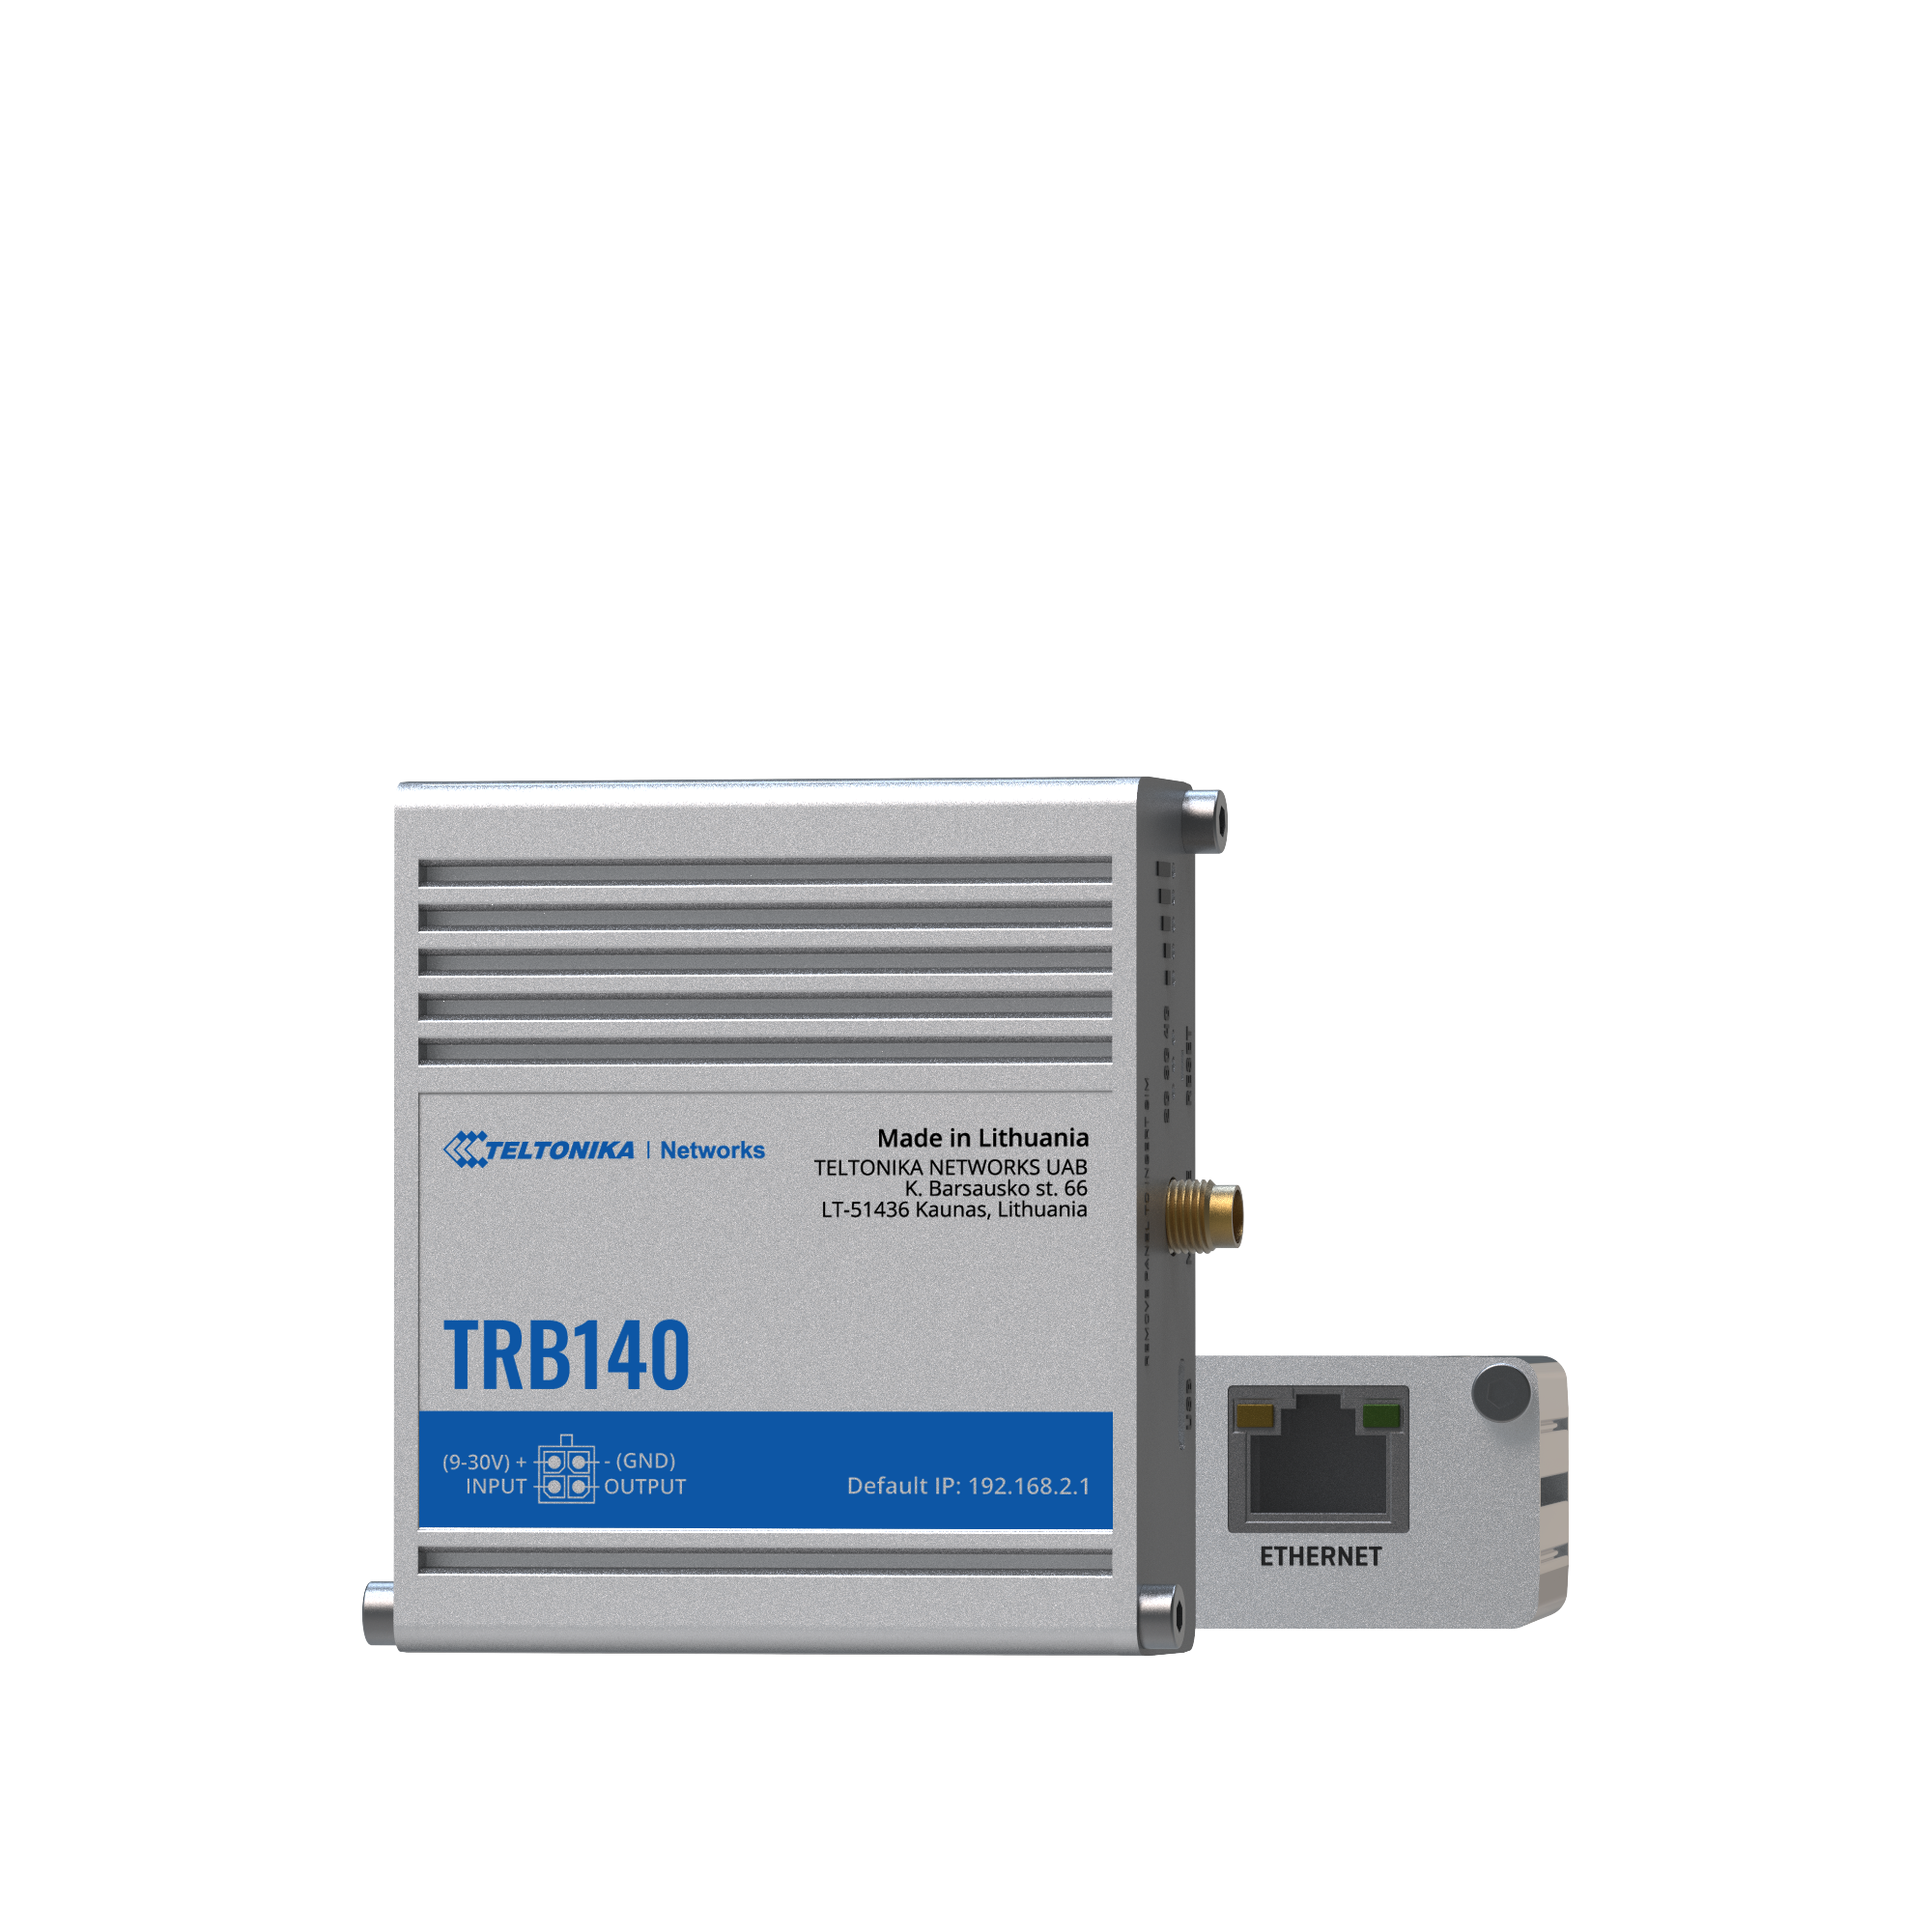 Teltonika TRB140 Industrial Rugged 4G IoT Gateway